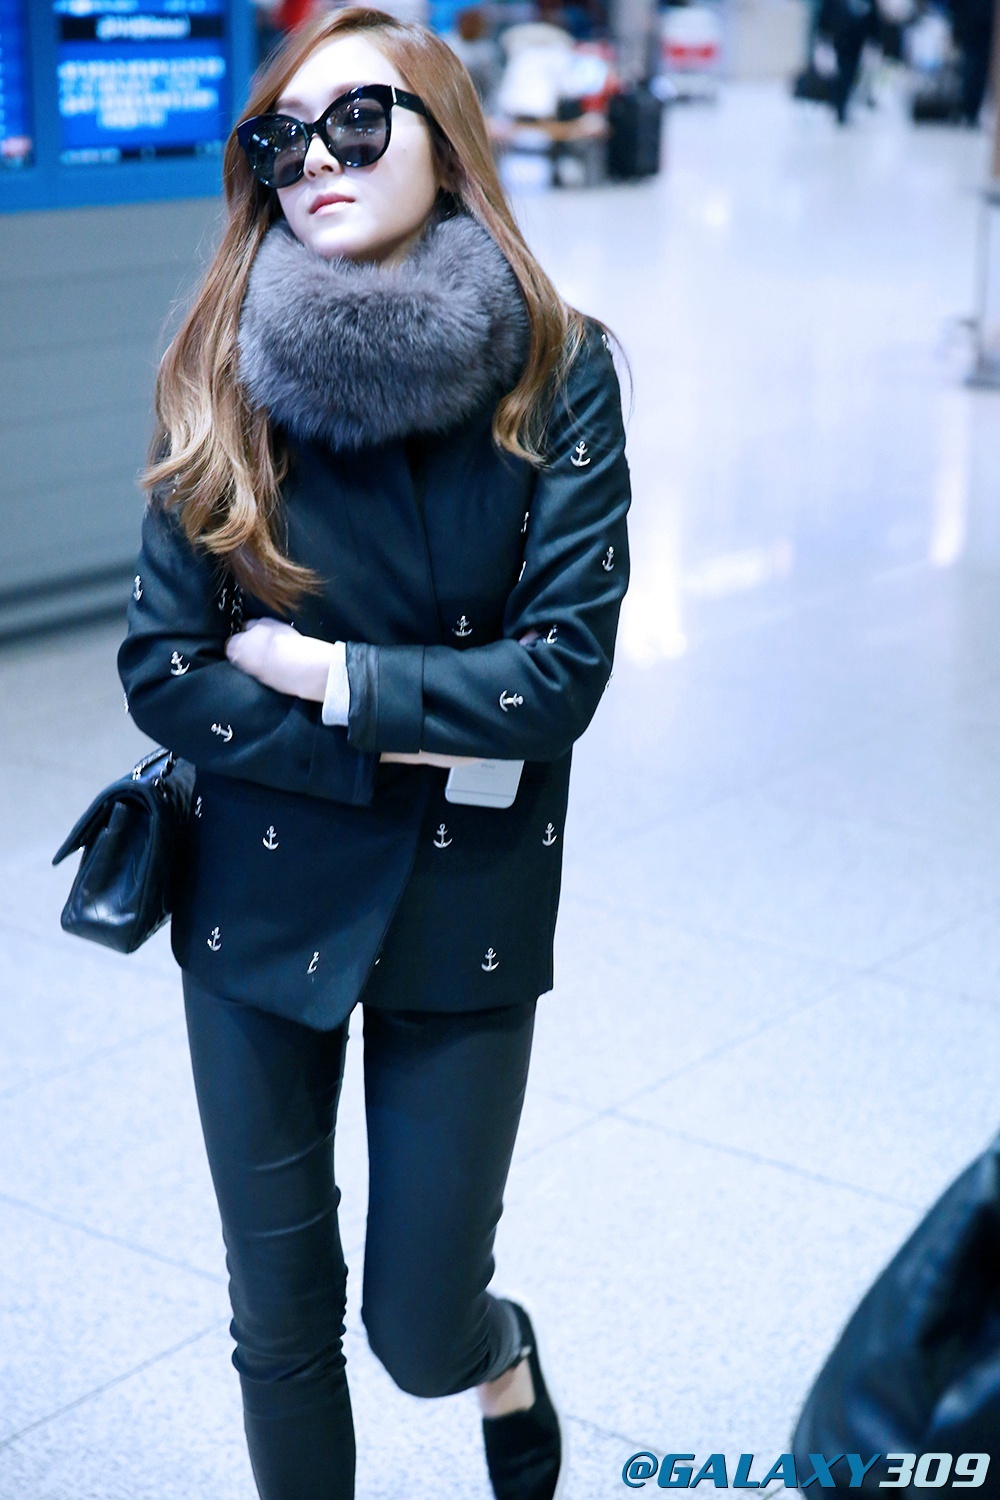 Jessica Airport Fashion 2015 - Official Korean Fashion